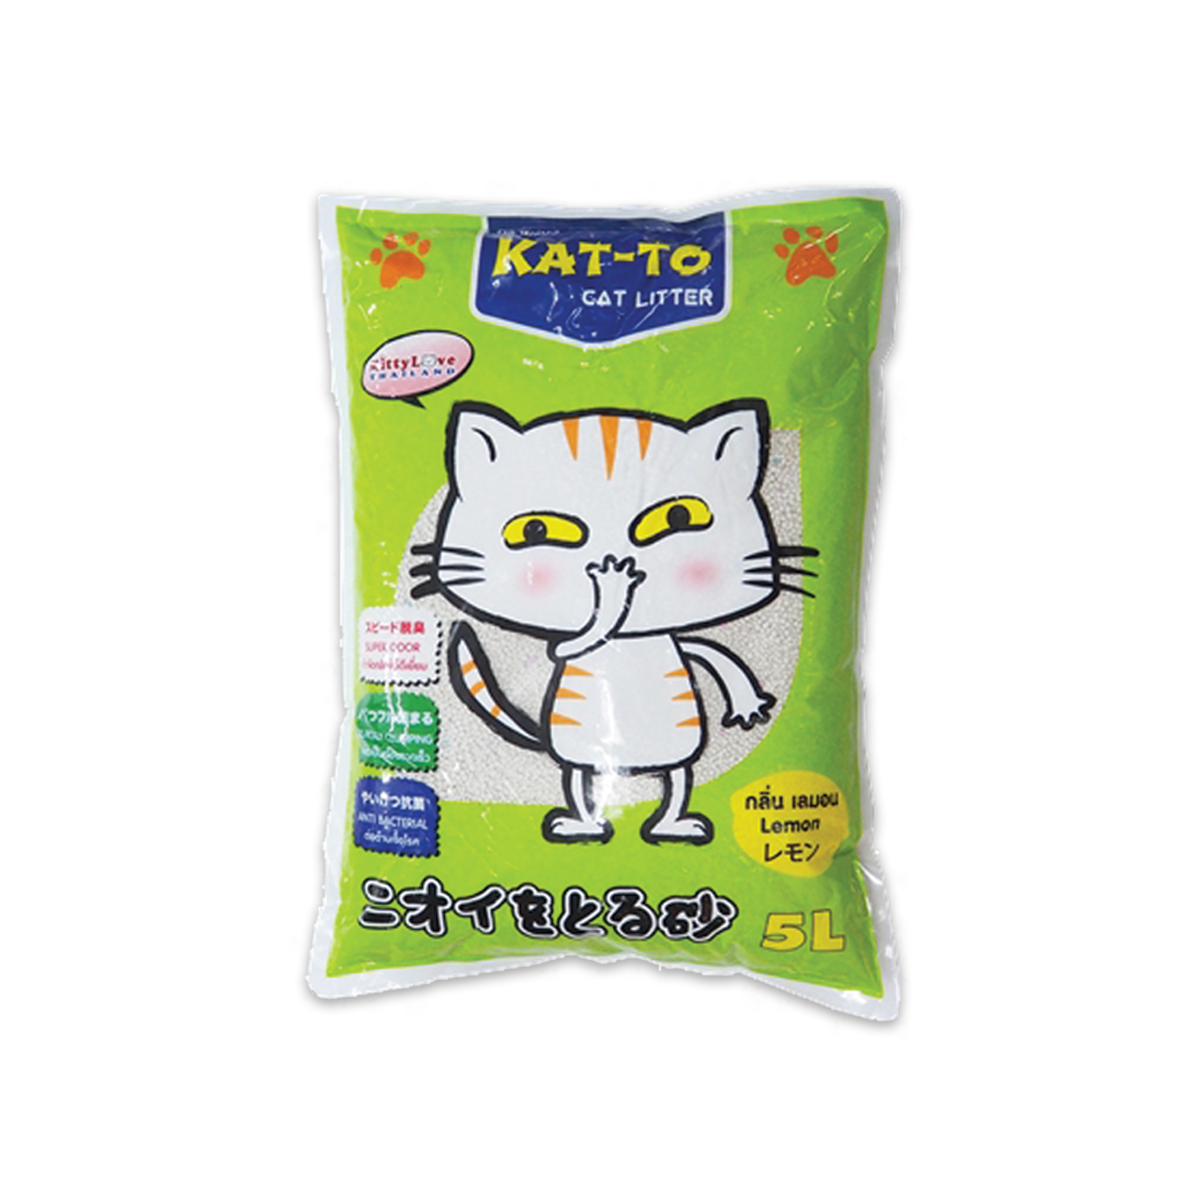 Kat-To Lemon Scent แคทโตะ ทรายแมวกลิ่นเลม่อน